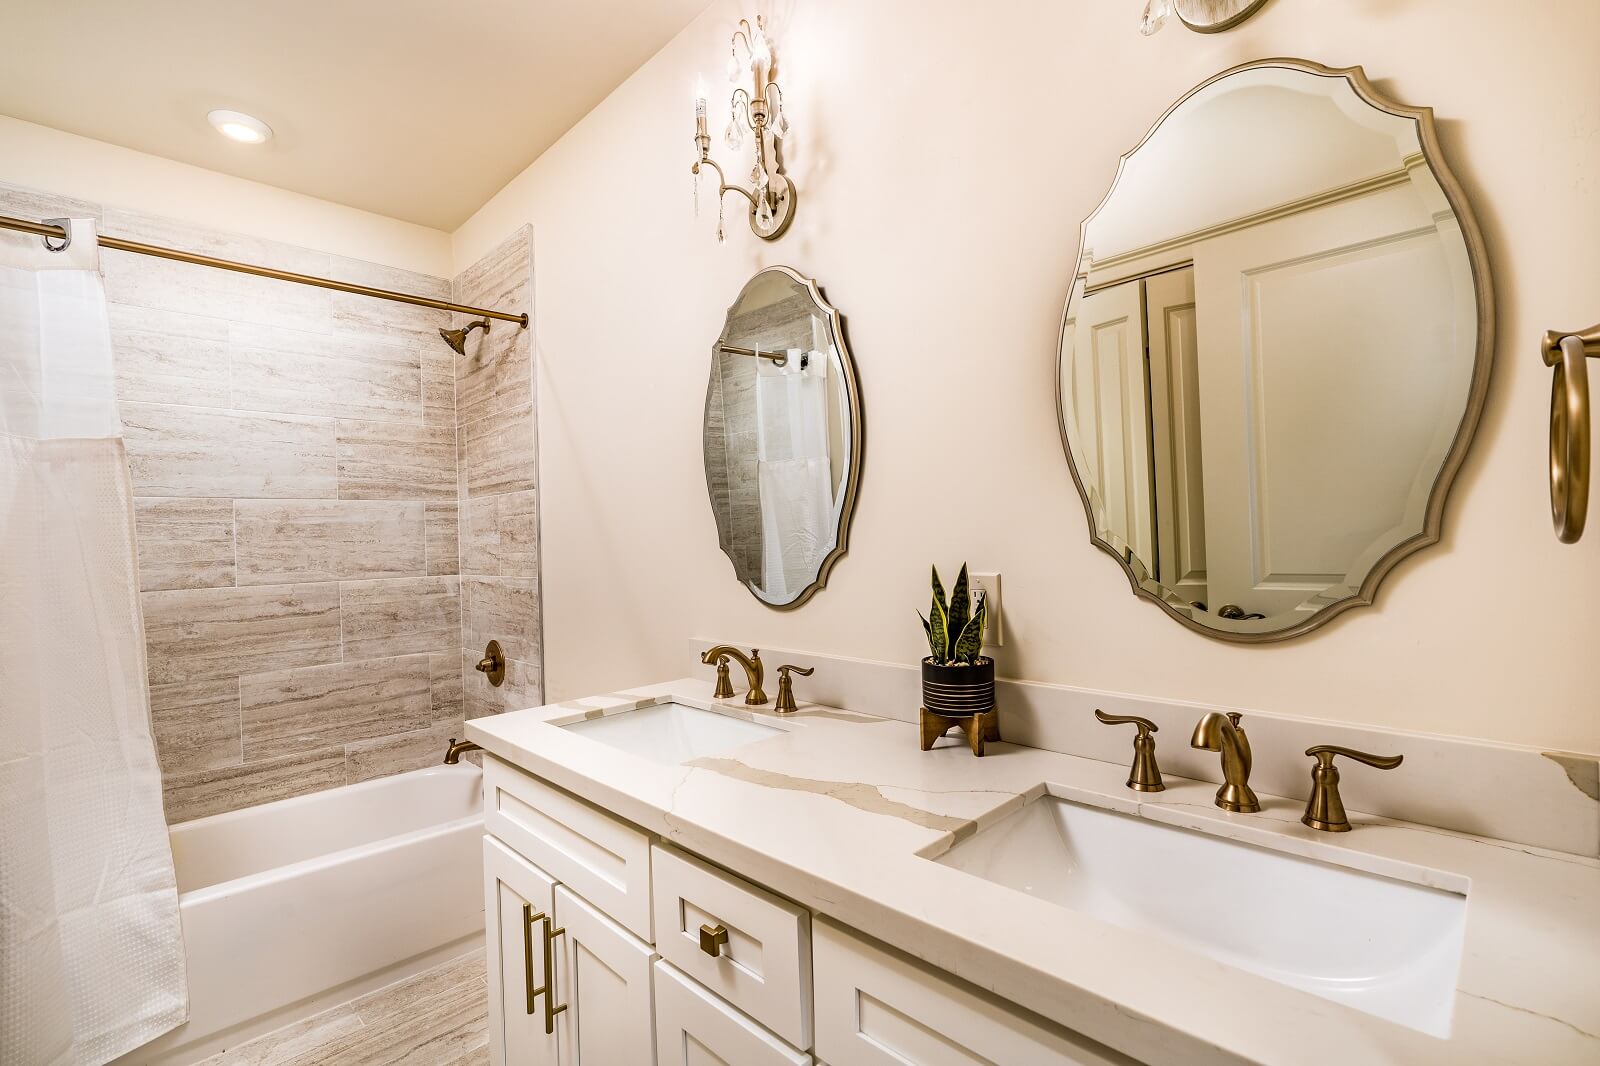 The Alexandre Unit 306 bathroom, a New Orleans luxury rental.